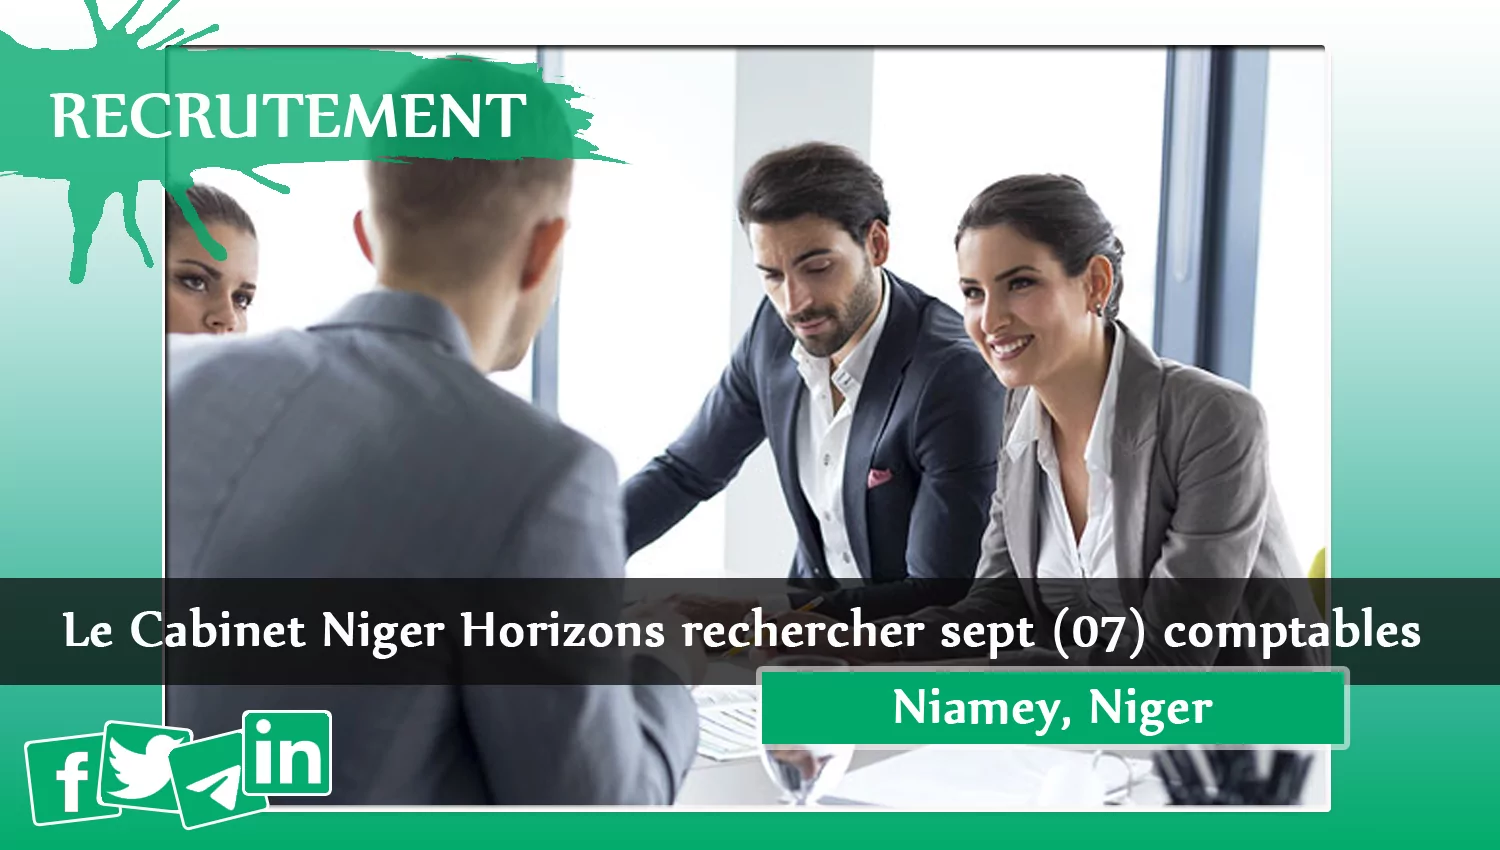 Le Cabinet Niger Horizons rechercher sept (07) comptables, Niamey, Niger